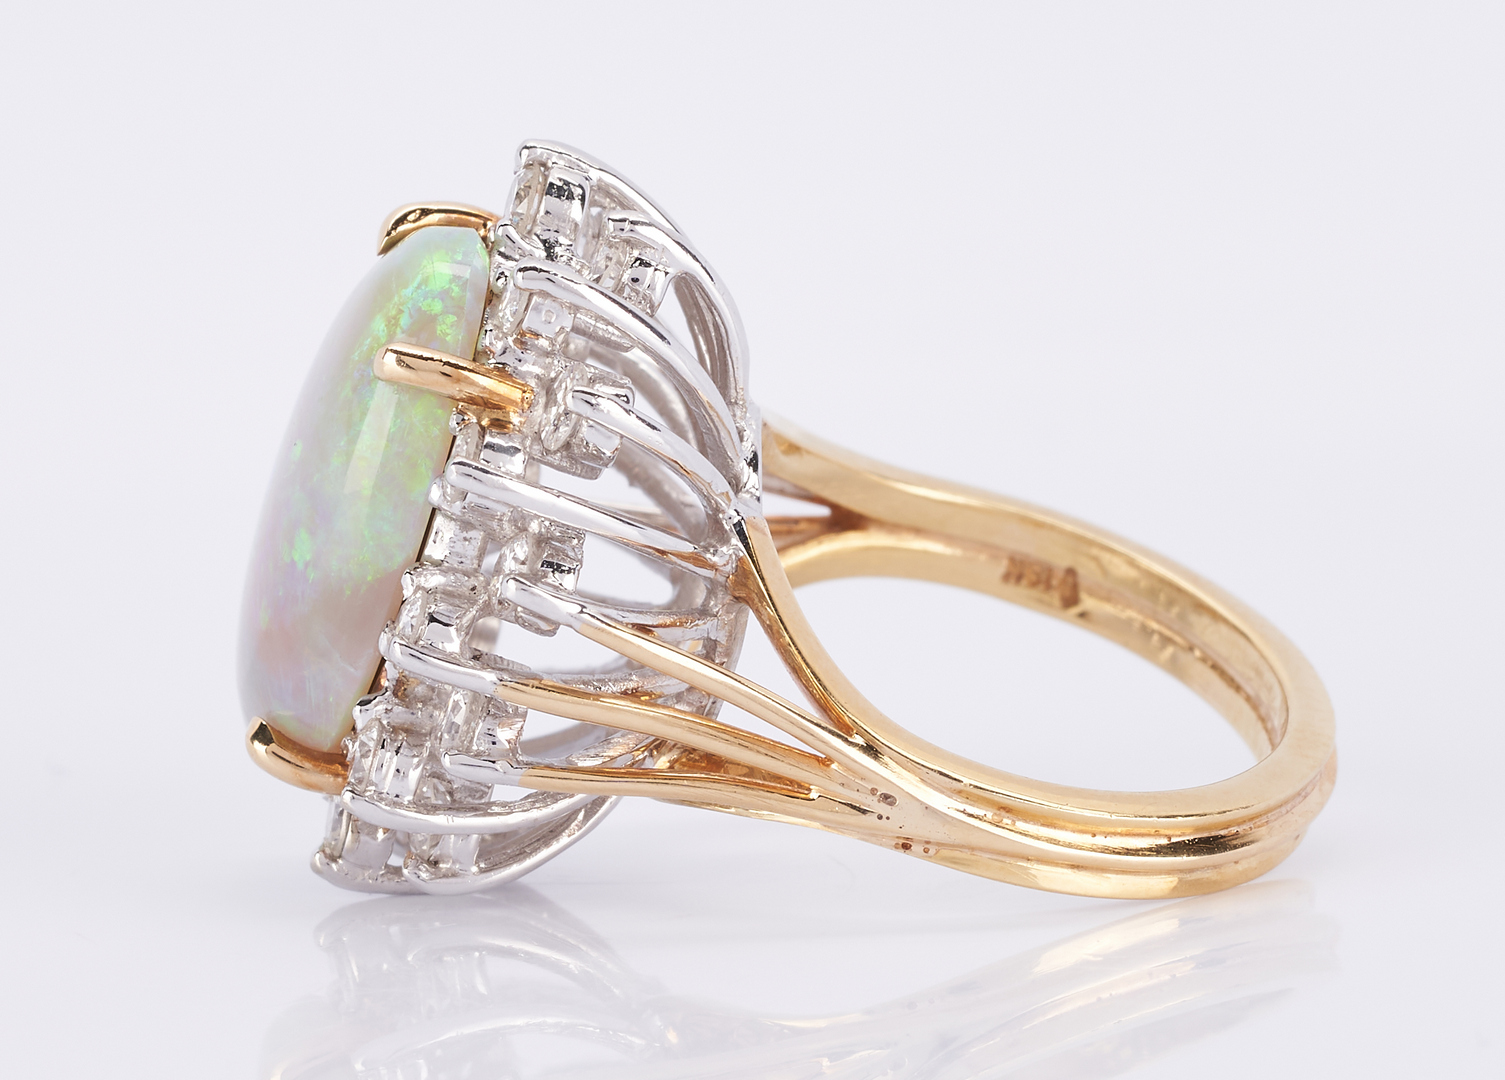 Lot 510: 18K Opal and Diamond Ring + Earrings